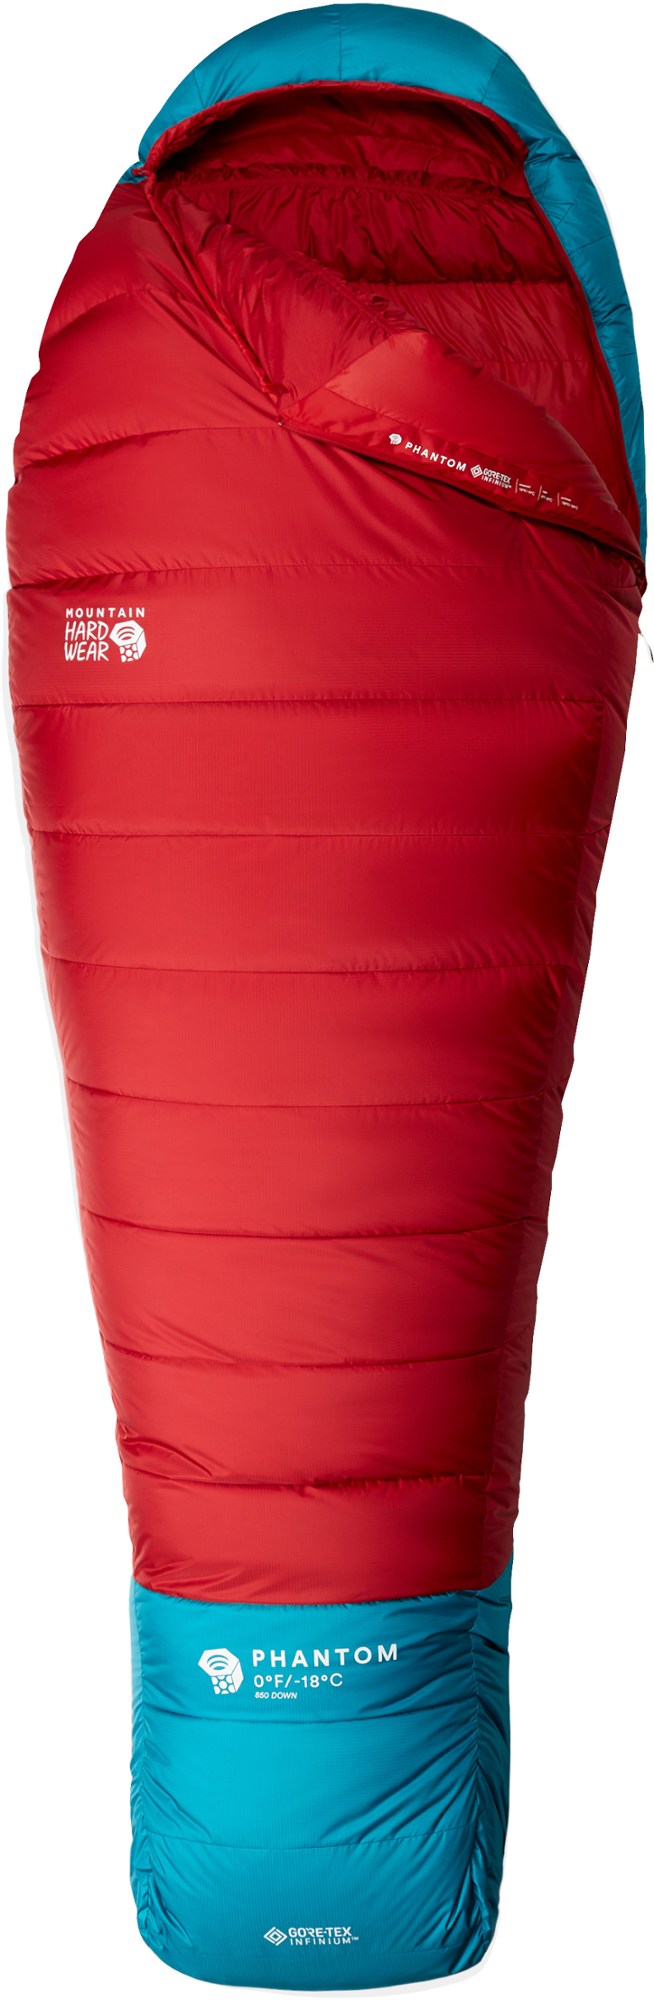 цена Спальный мешок Phantom GORE-TEX 0 Mountain Hardwear, красный